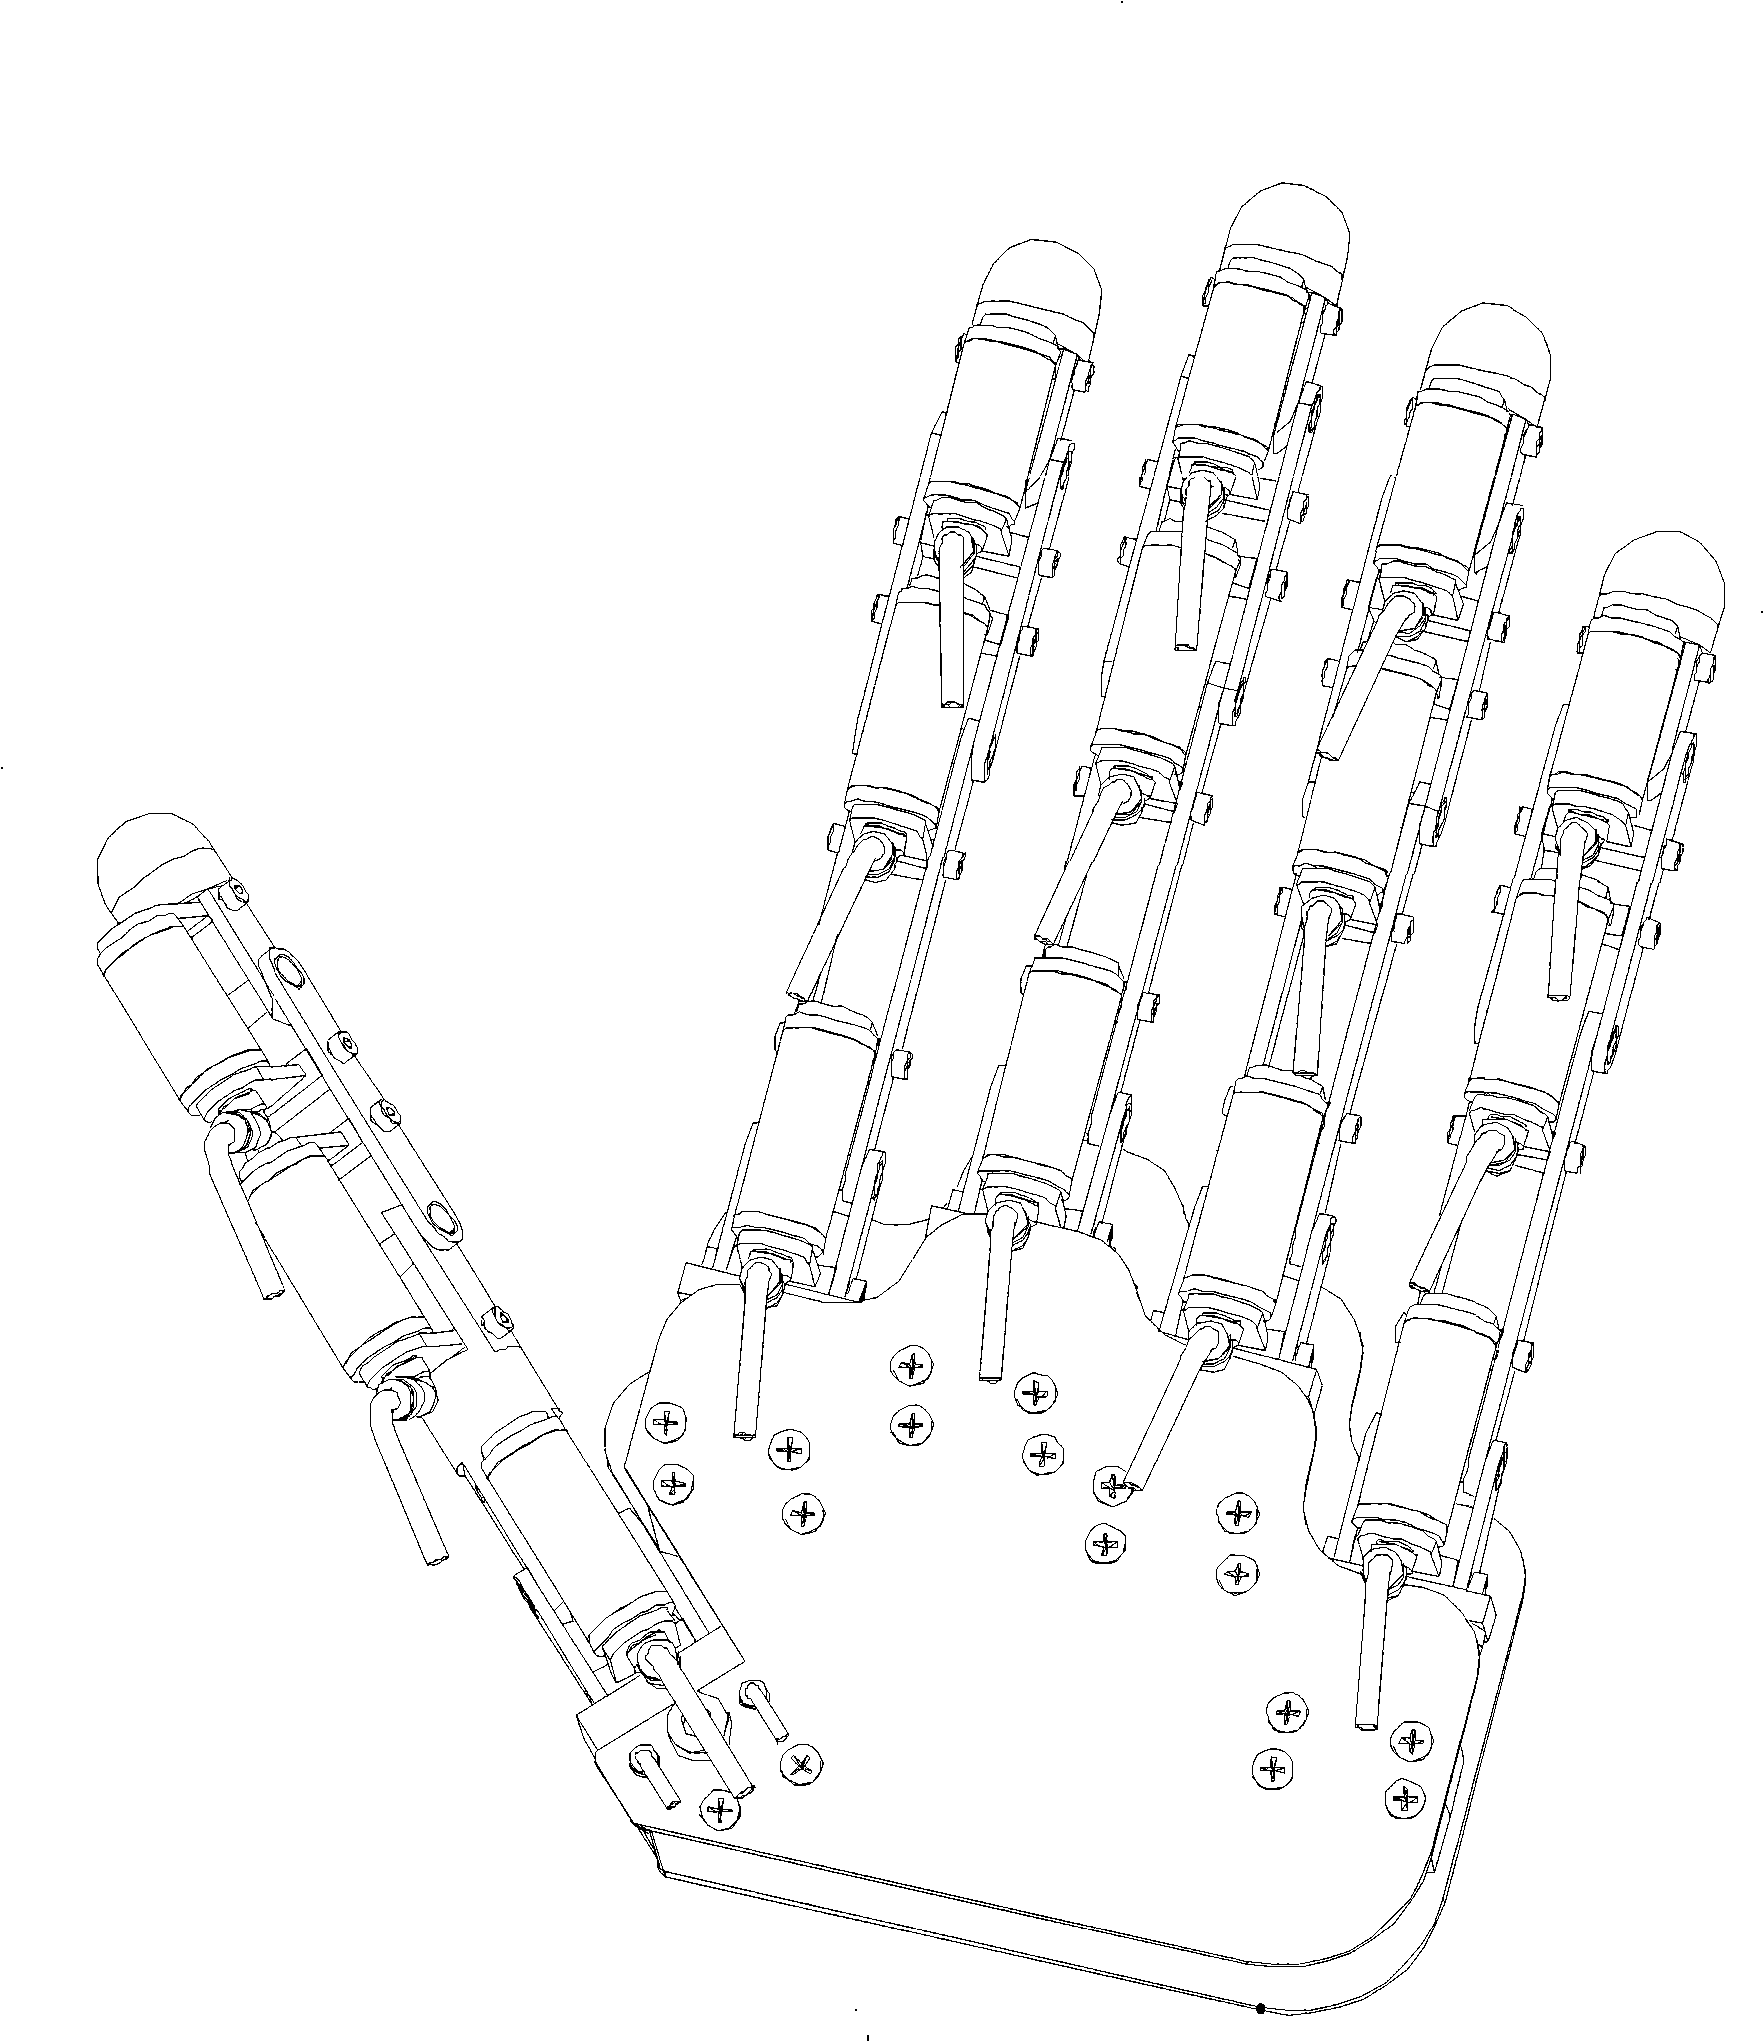 Multi-finger dexterous hand of robot based on pneumatic flexible driver